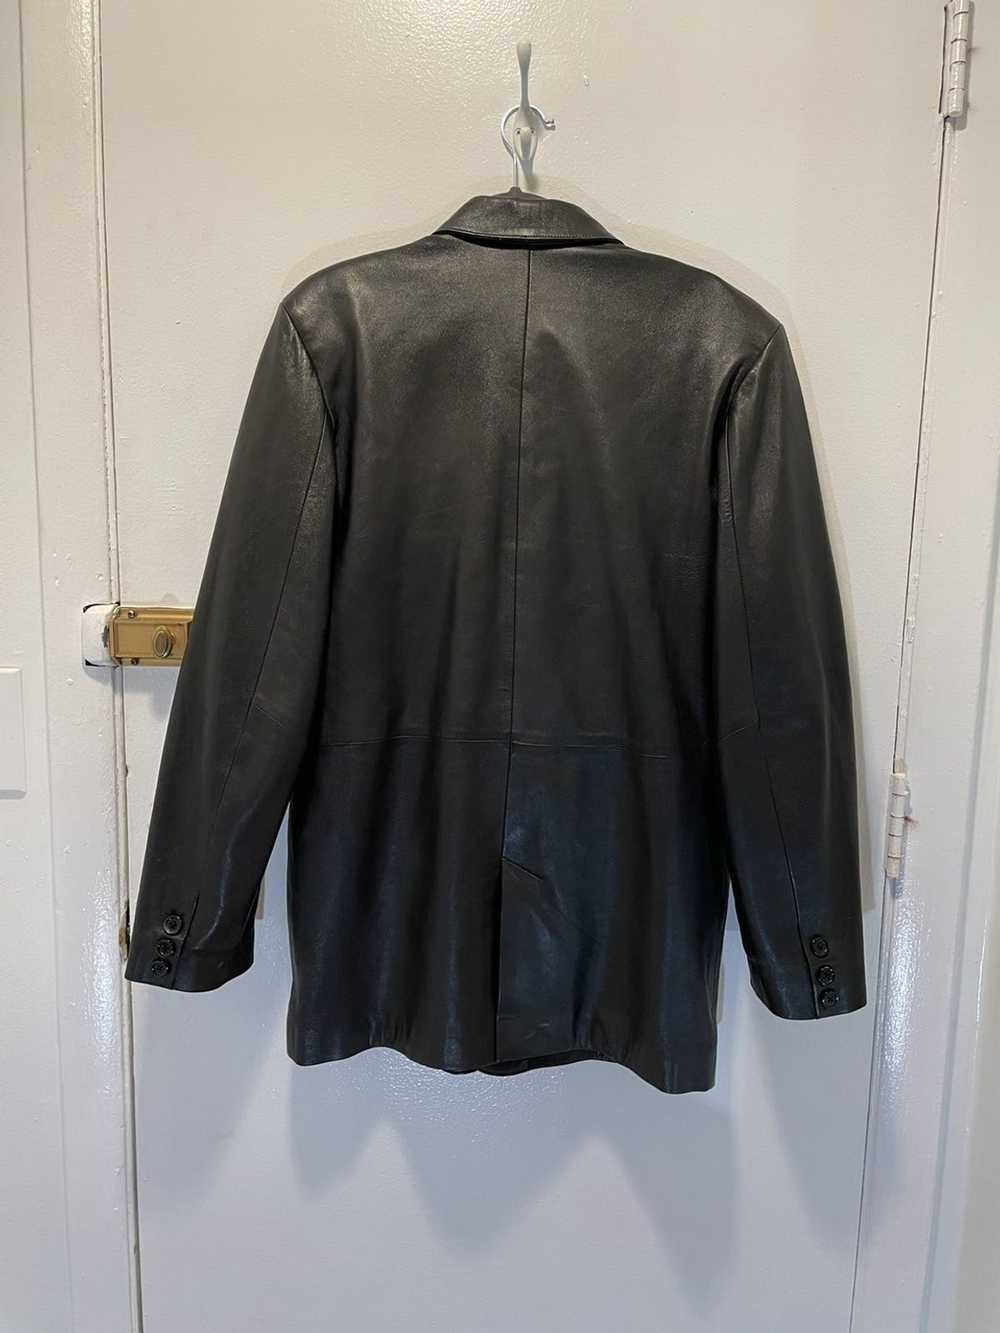 Vintage Genuine Leather blazer - image 2